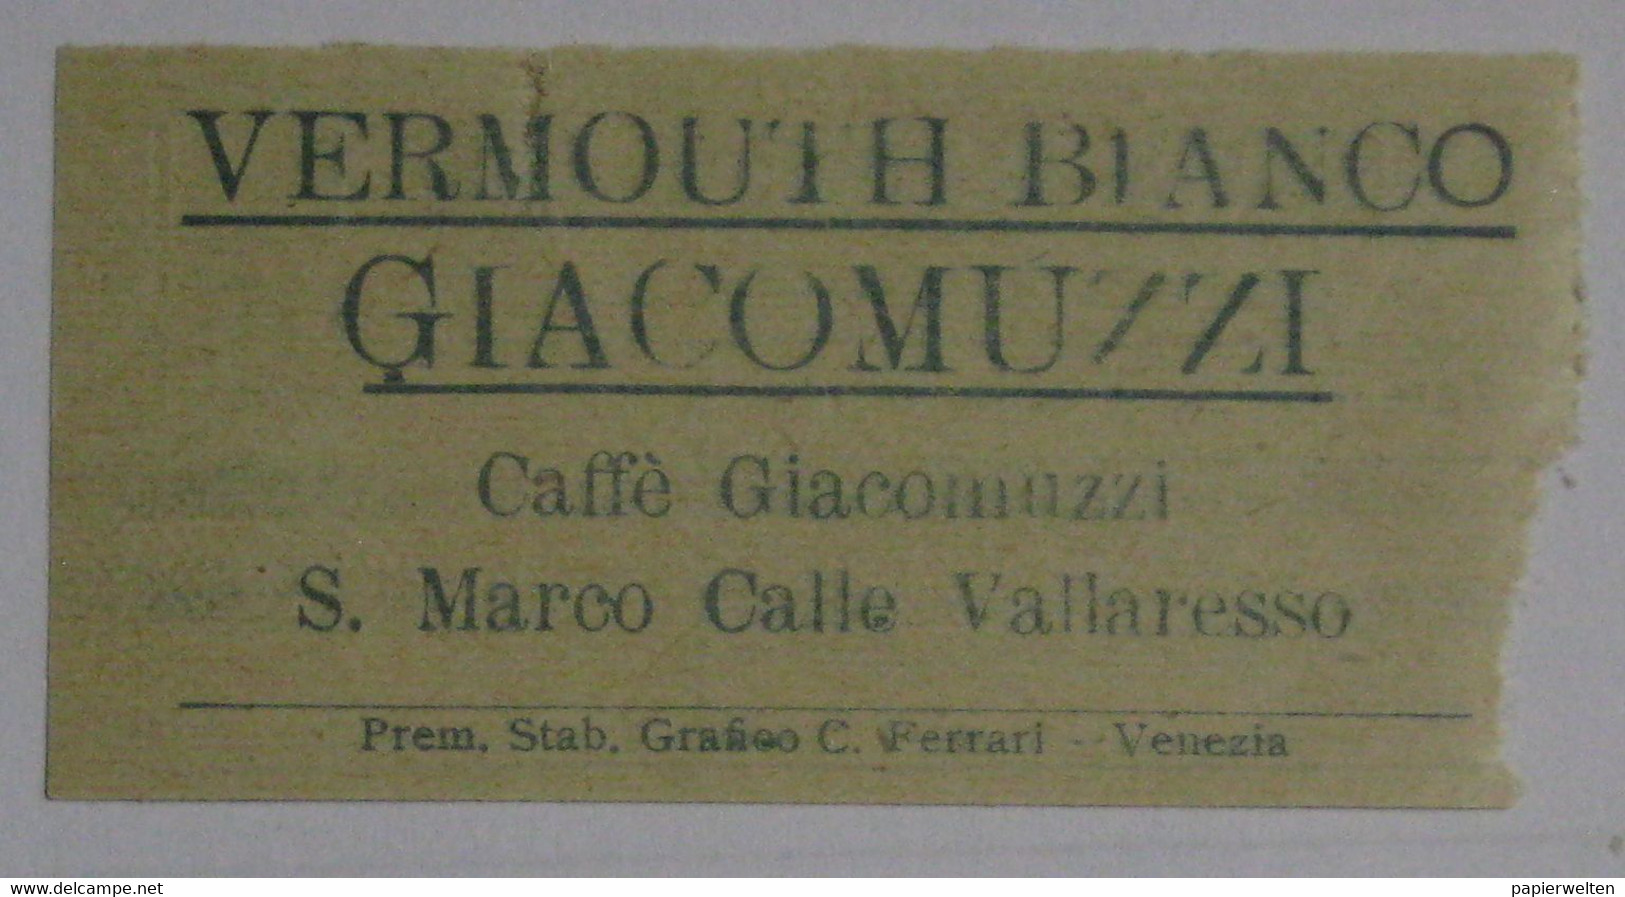 Lido Di Venezia - Tramvia Elettrica Lido C.I.G.A / Vermouth Bianco Giacomuzzi Caffe Giacomuzzi S. Marco Calle Vallaresso - Europa